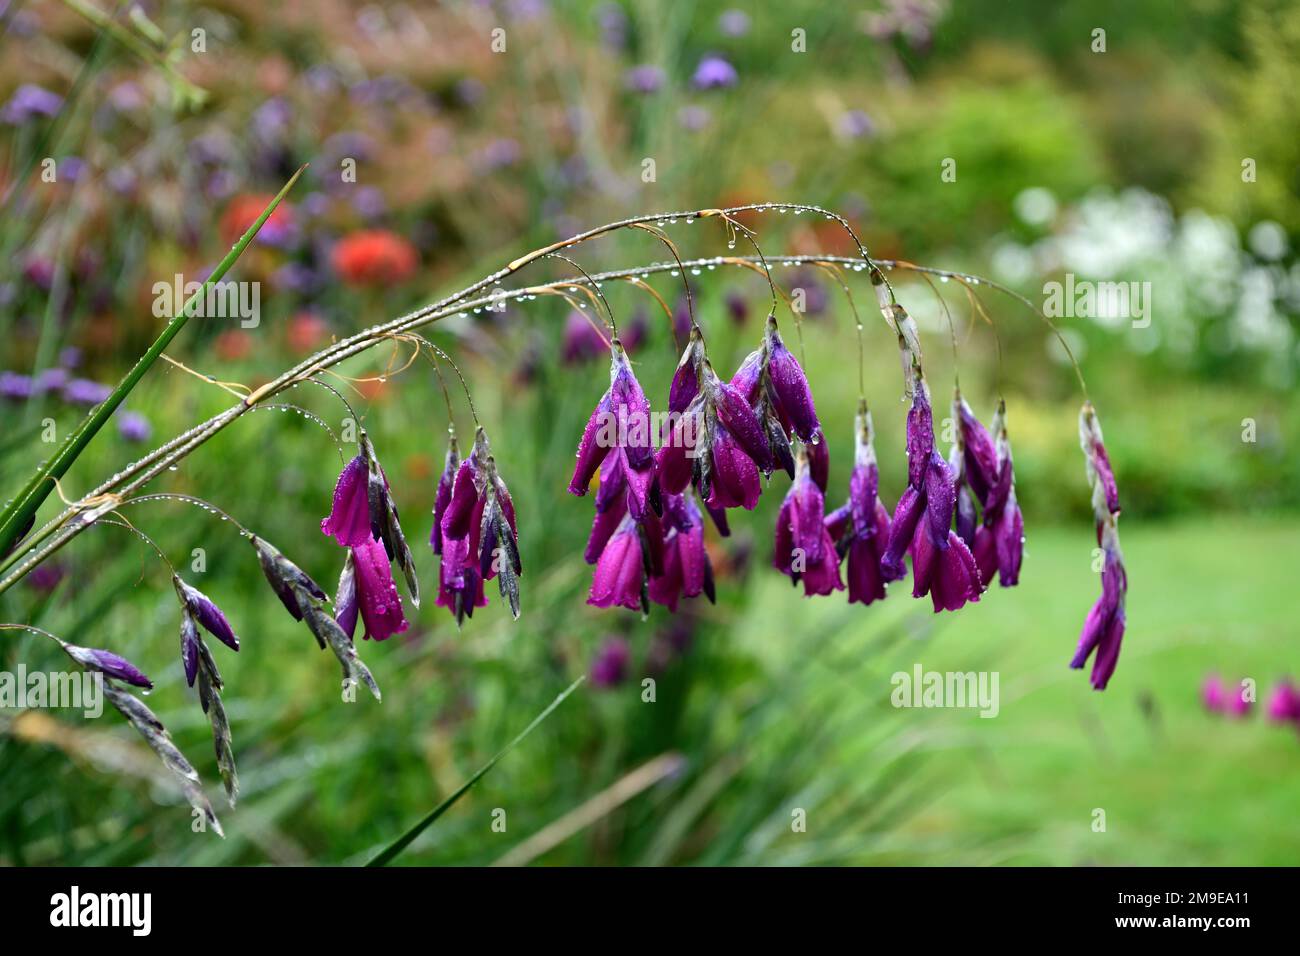 https://c8.alamy.com/comp/2M9EA11/dierama-pulcherrimumpink-purple-flowersflowerperennialsarchingdanglinghangingbell-shapedangels-fishing-rodsrm-floral-2M9EA11.jpg